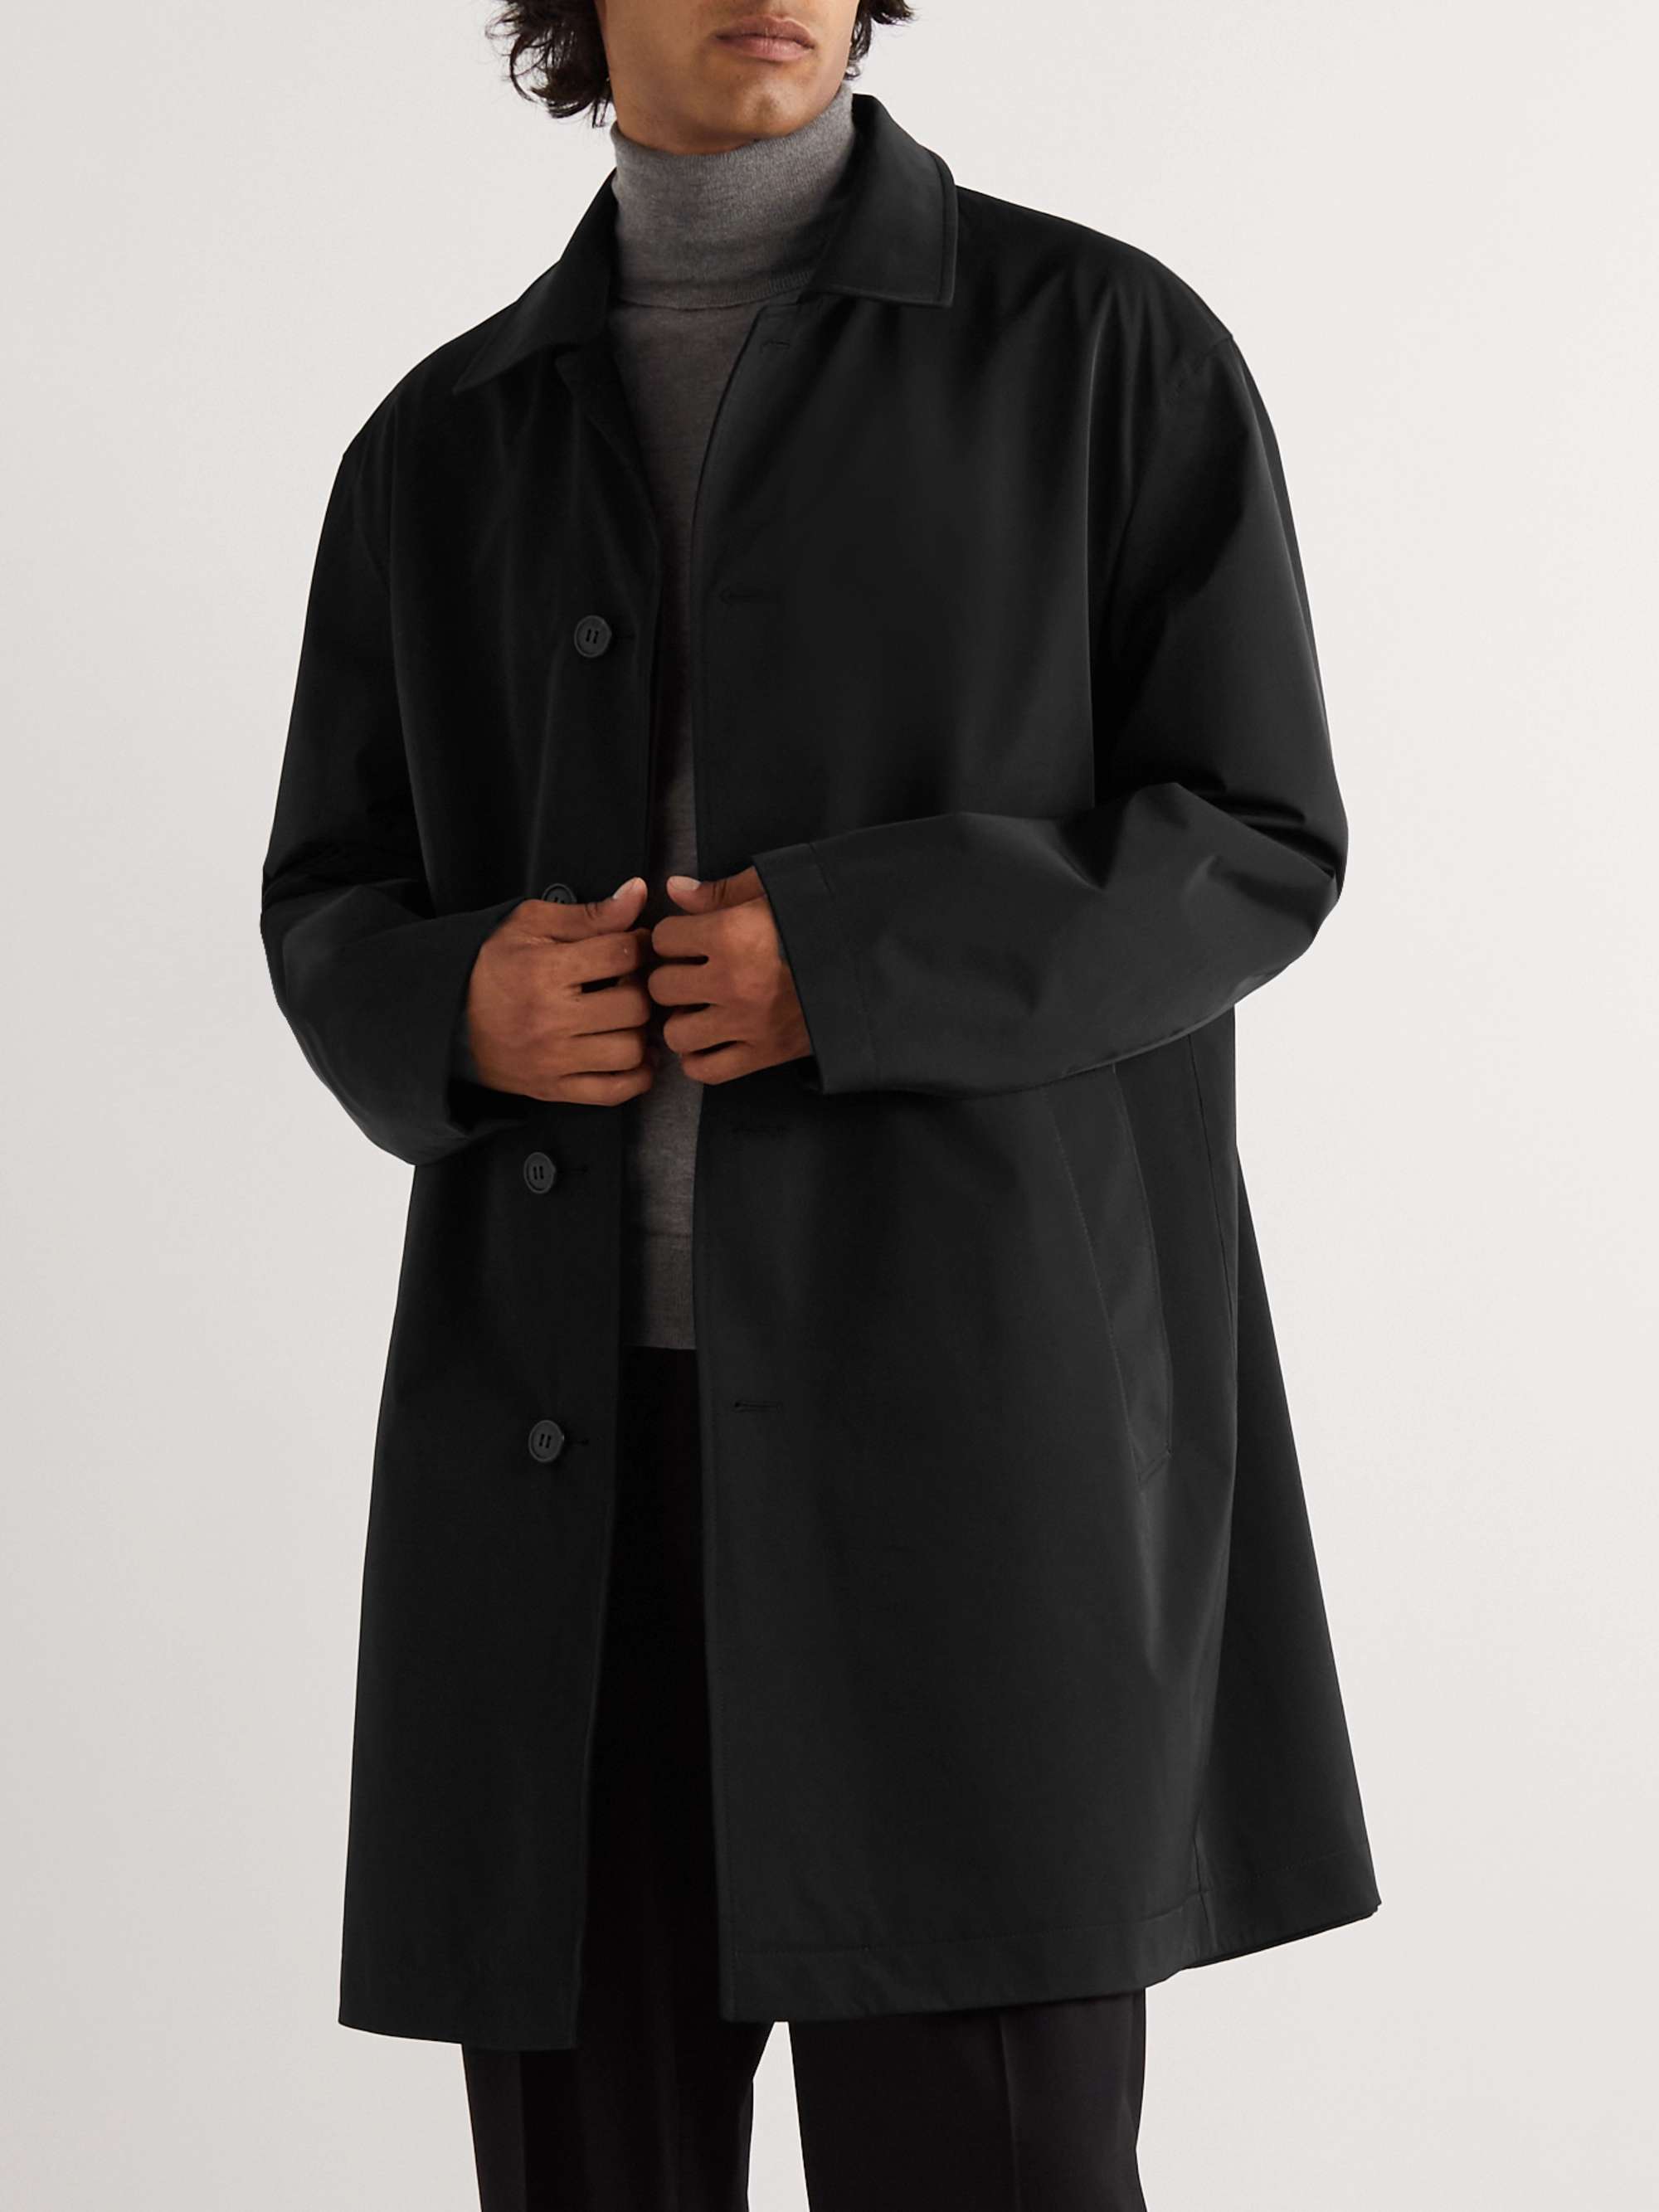 ZEGNA Reversible Wool-Twill and Shell Coat for Men | MR PORTER